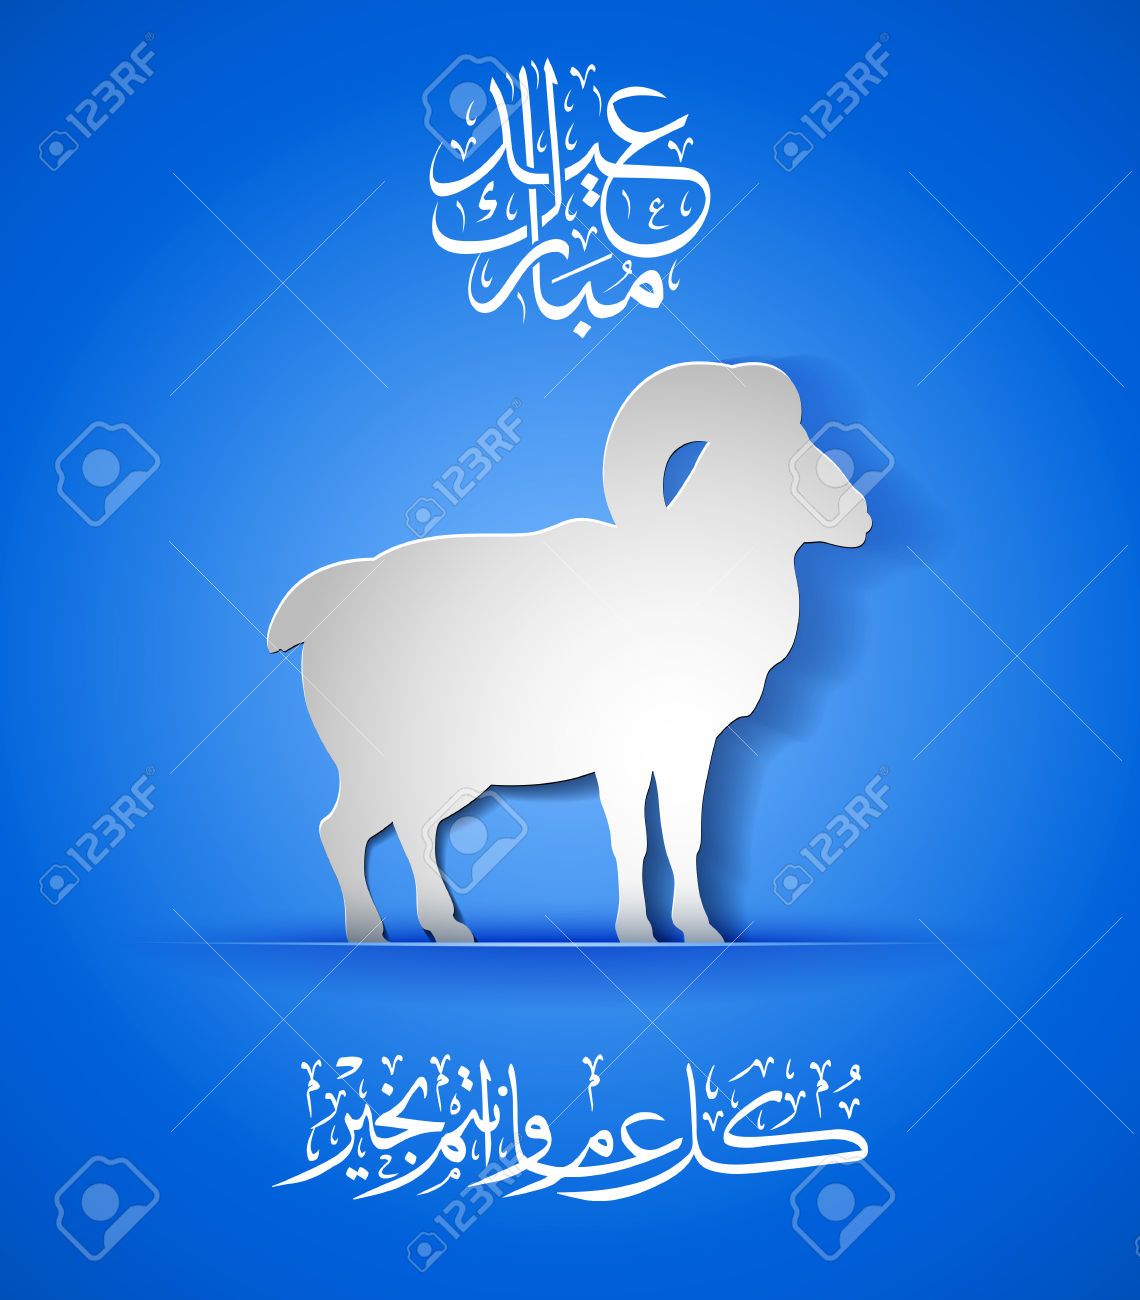 31864837-Arabic-Islamic-calligraphy-of-text-Eid-Mubarak-and-sheep-on--Stock-Photo.jpg